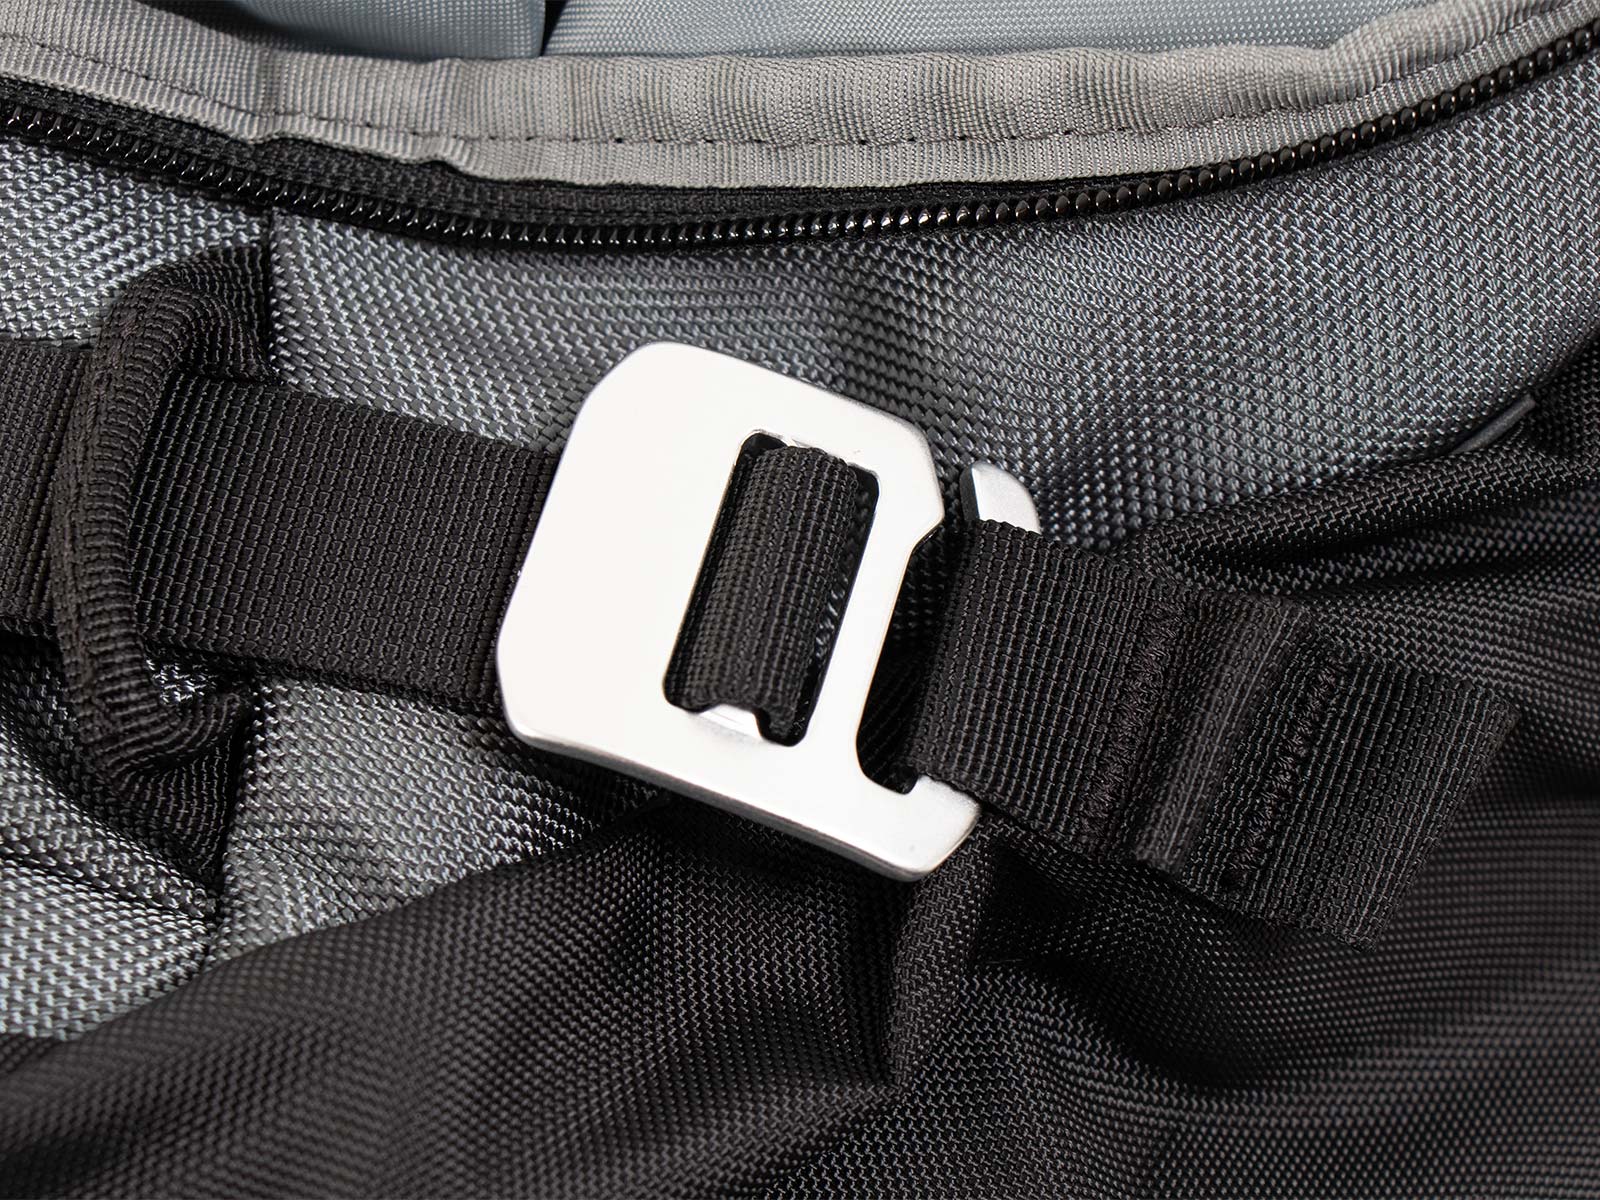 G-Hook aluminum hook for Xtravel bags